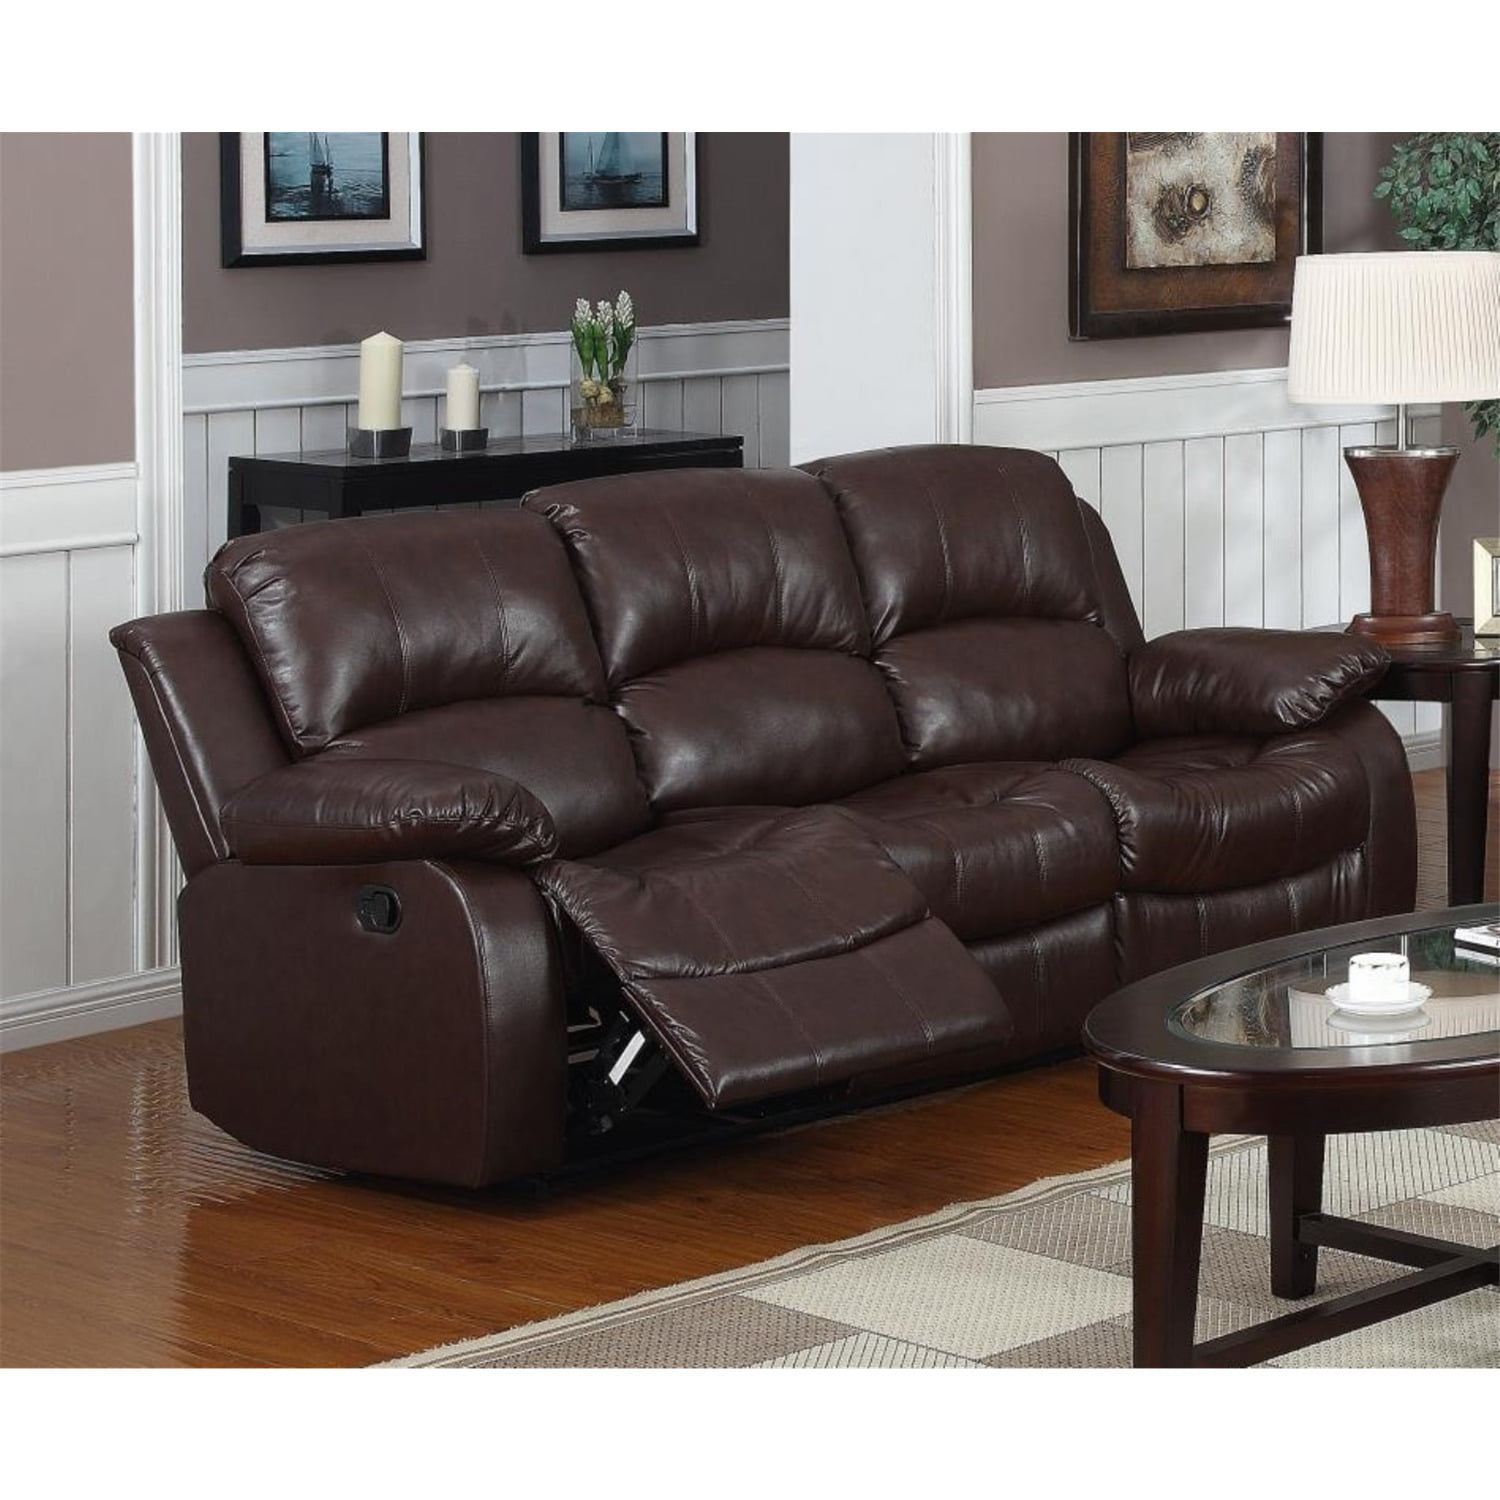 Kaden Bonded Leather Recliner Sofa in Brown